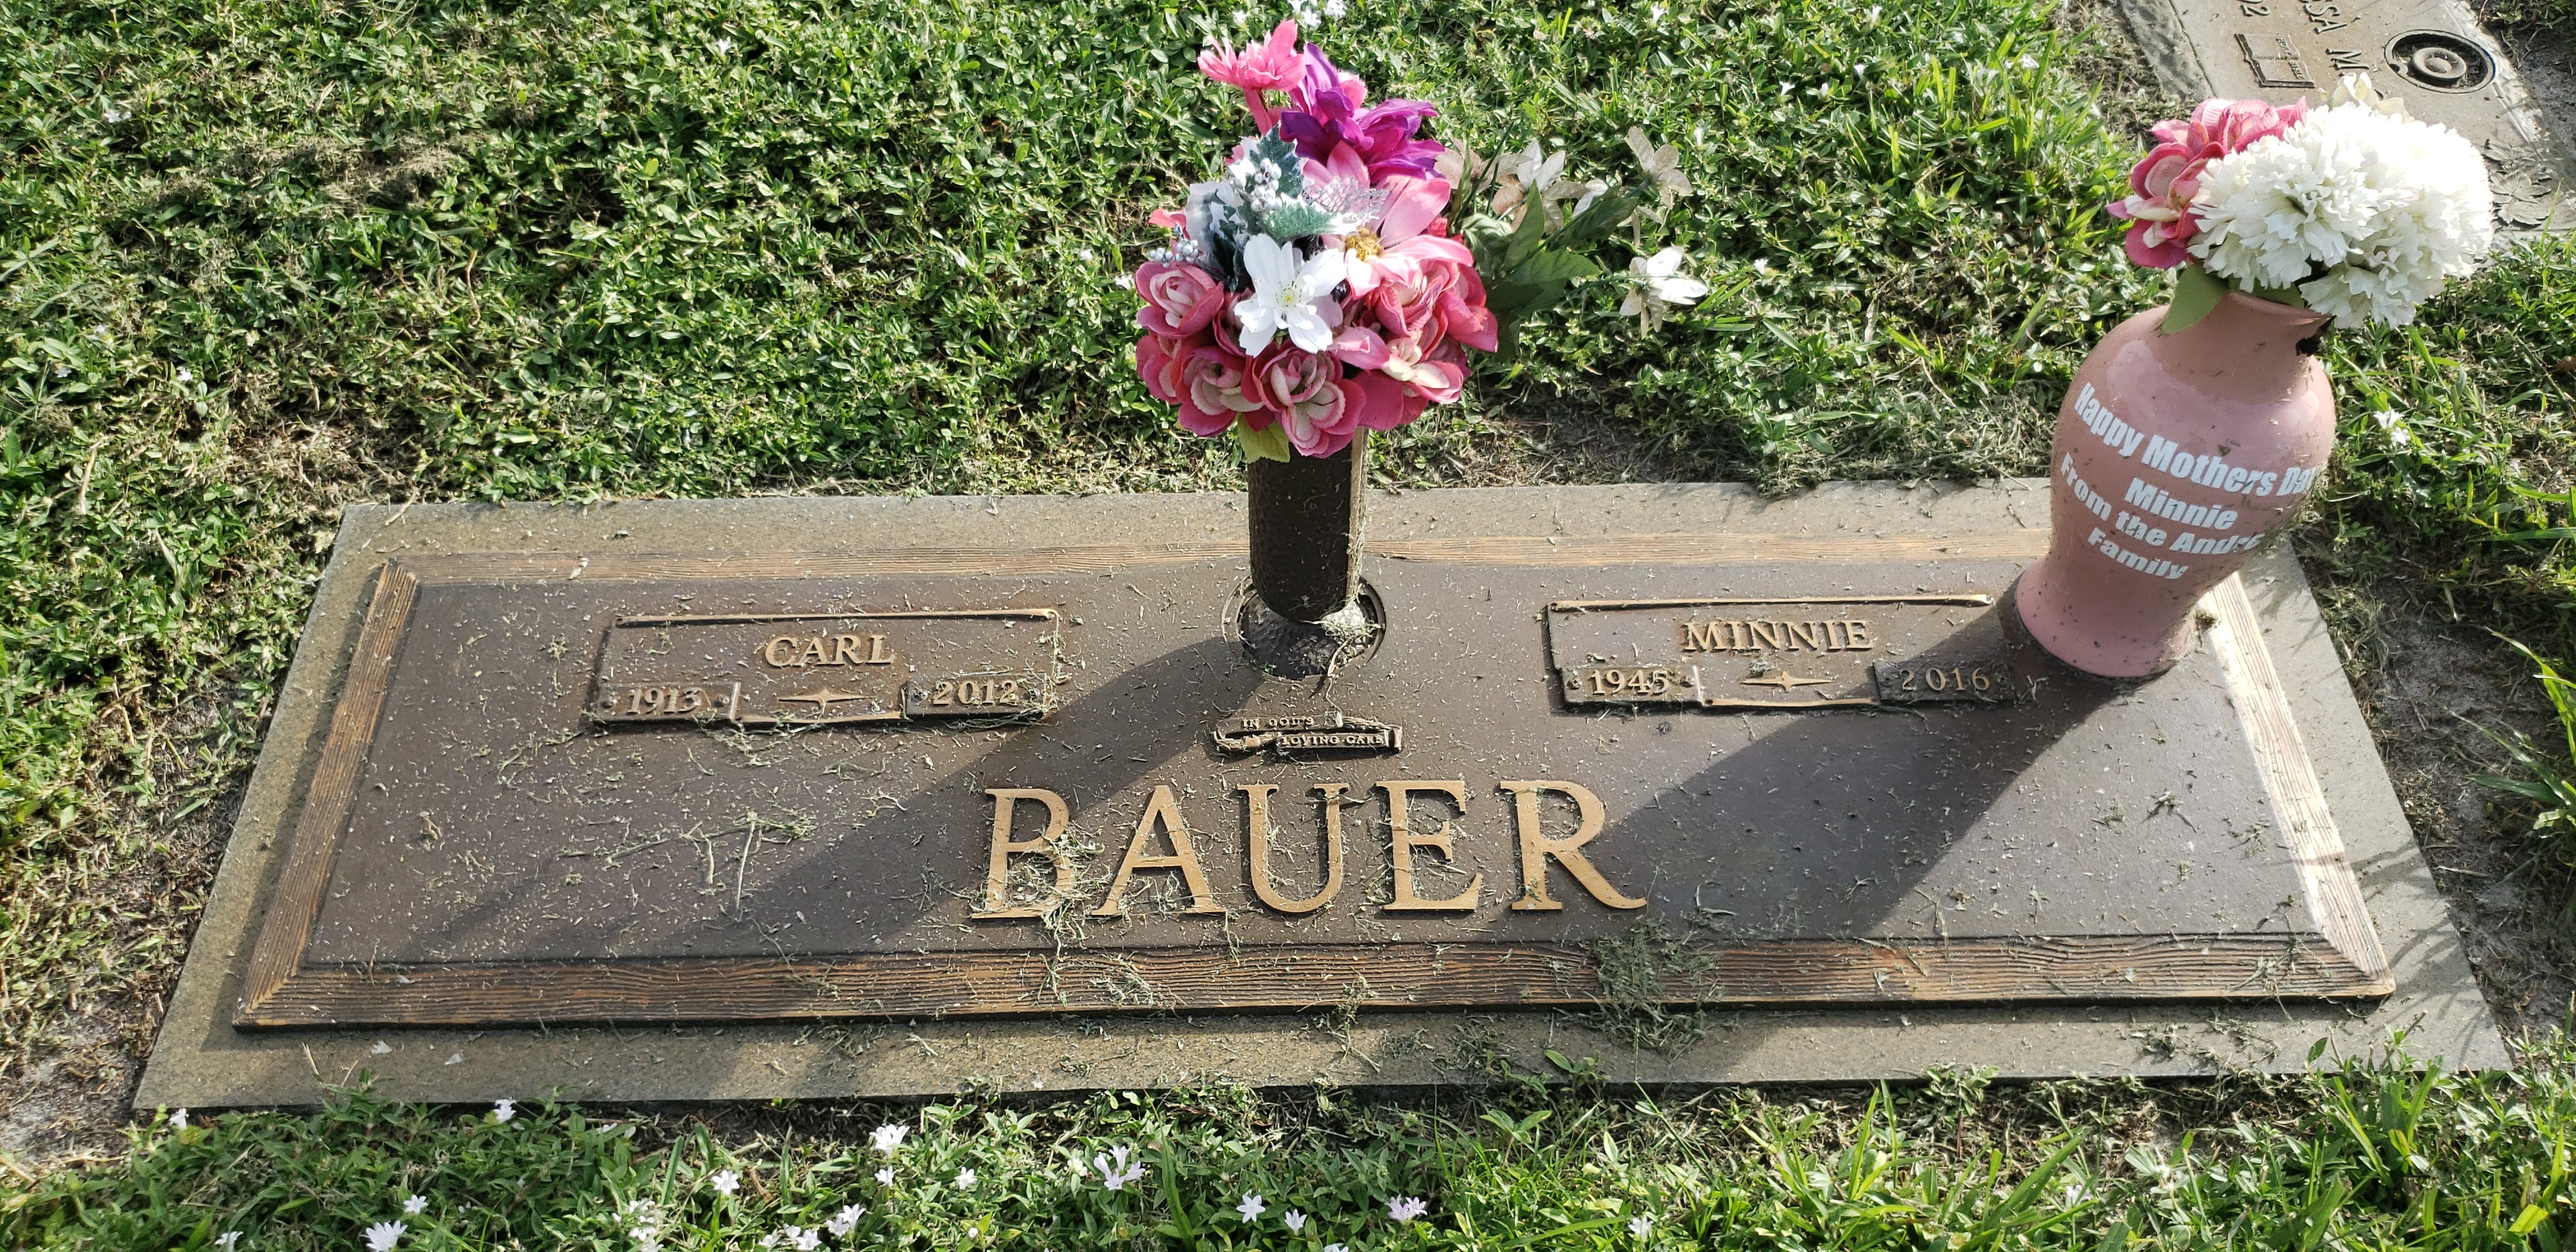 Carl Bauer